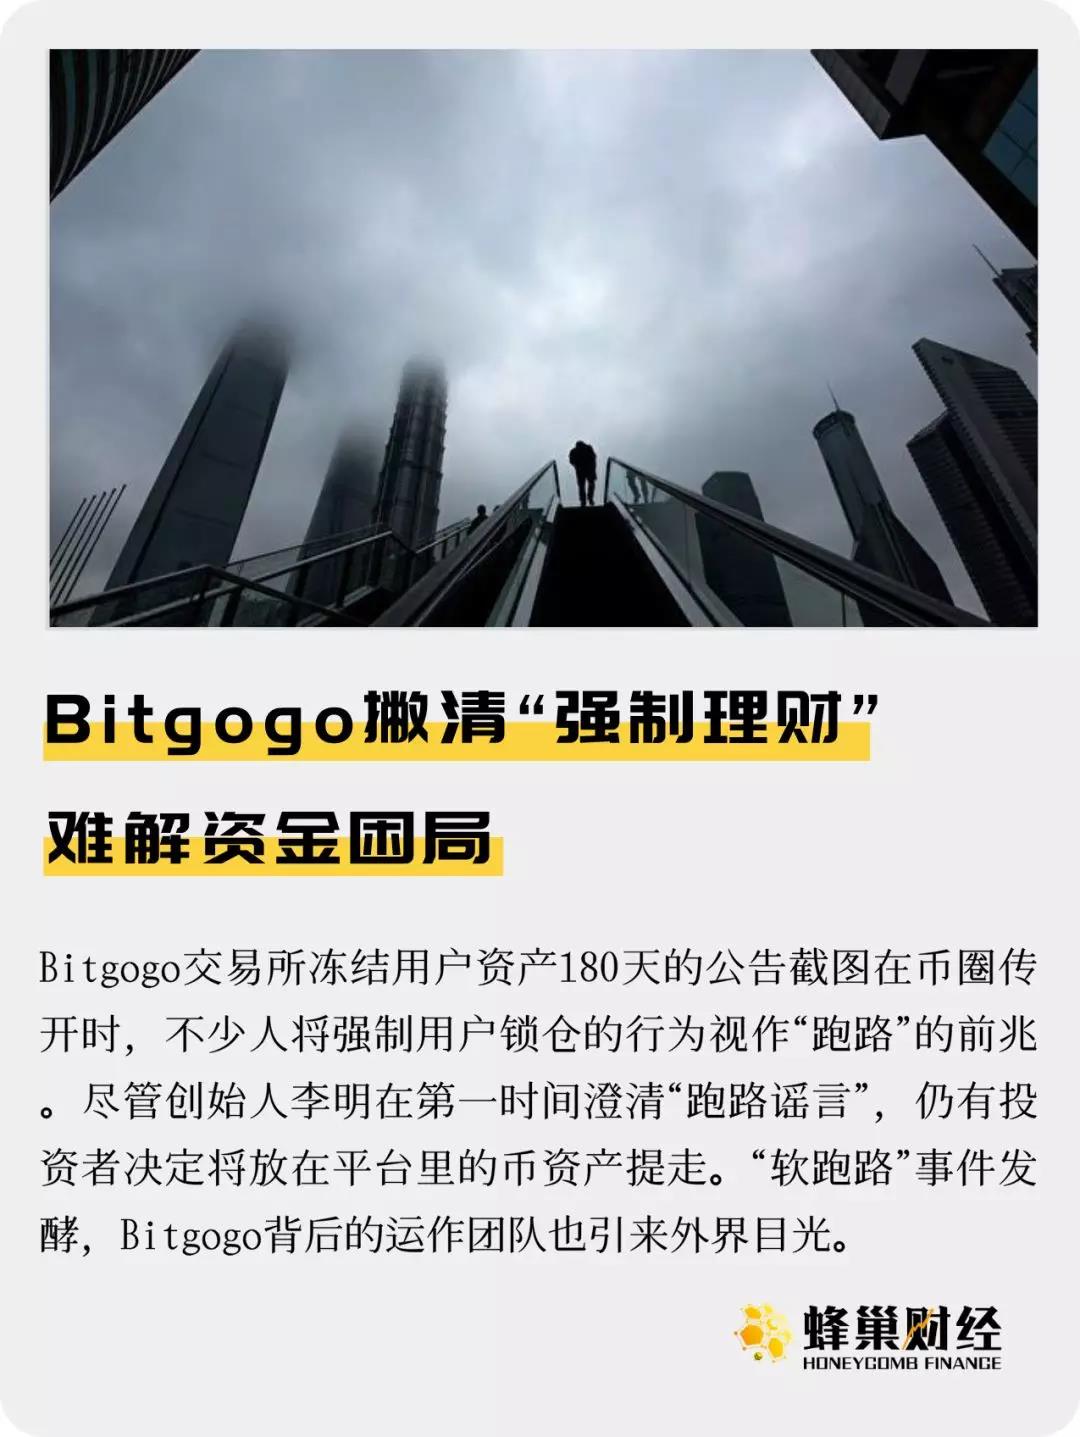 Bitgogo撇清“强制理财” 难解资金困局